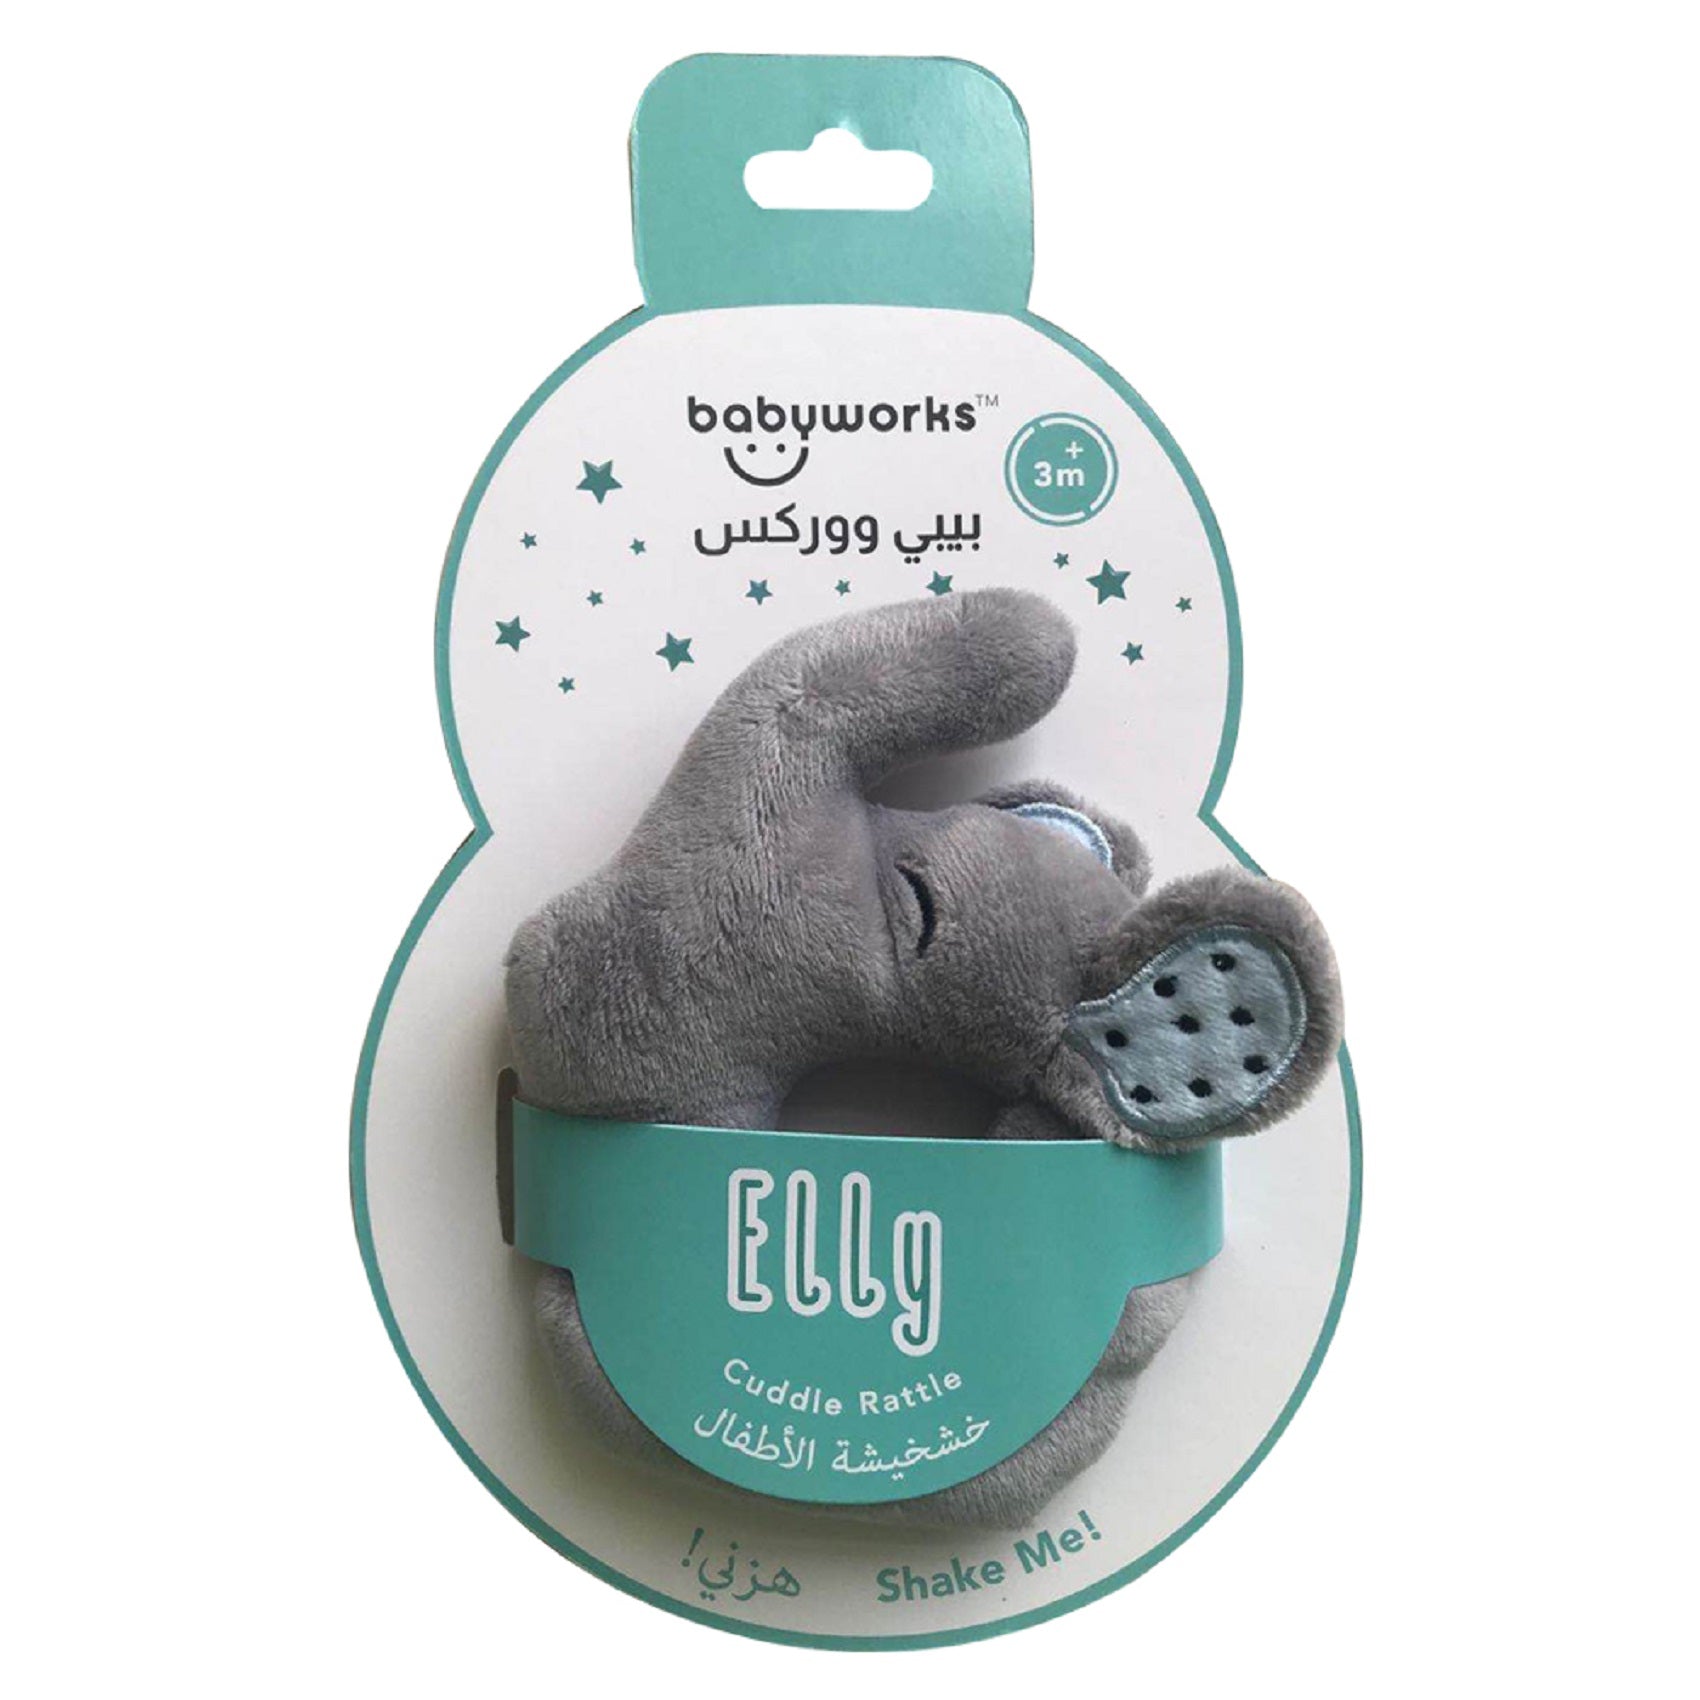 Baby Works - Bibibaby Cuddle Rattle - Elly Elephant